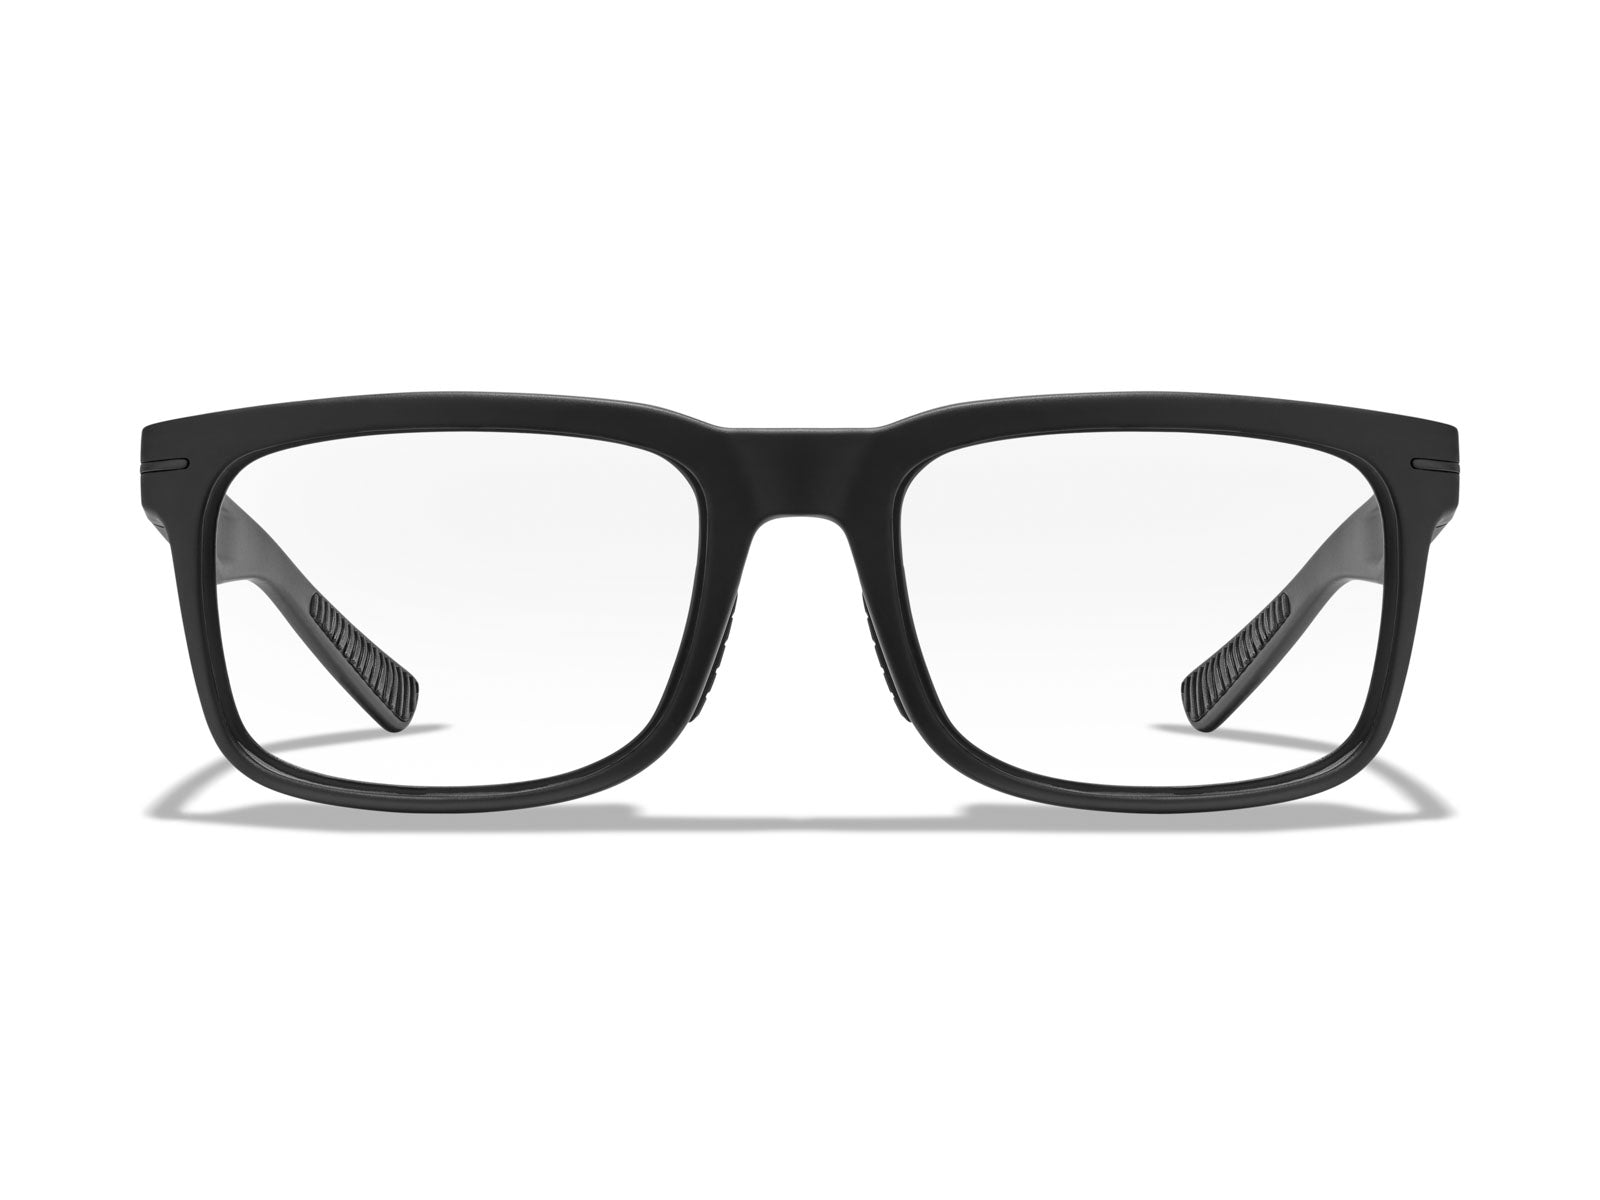 Roka Braker Eyeglasses in Crystal Ash / Black Tortoise